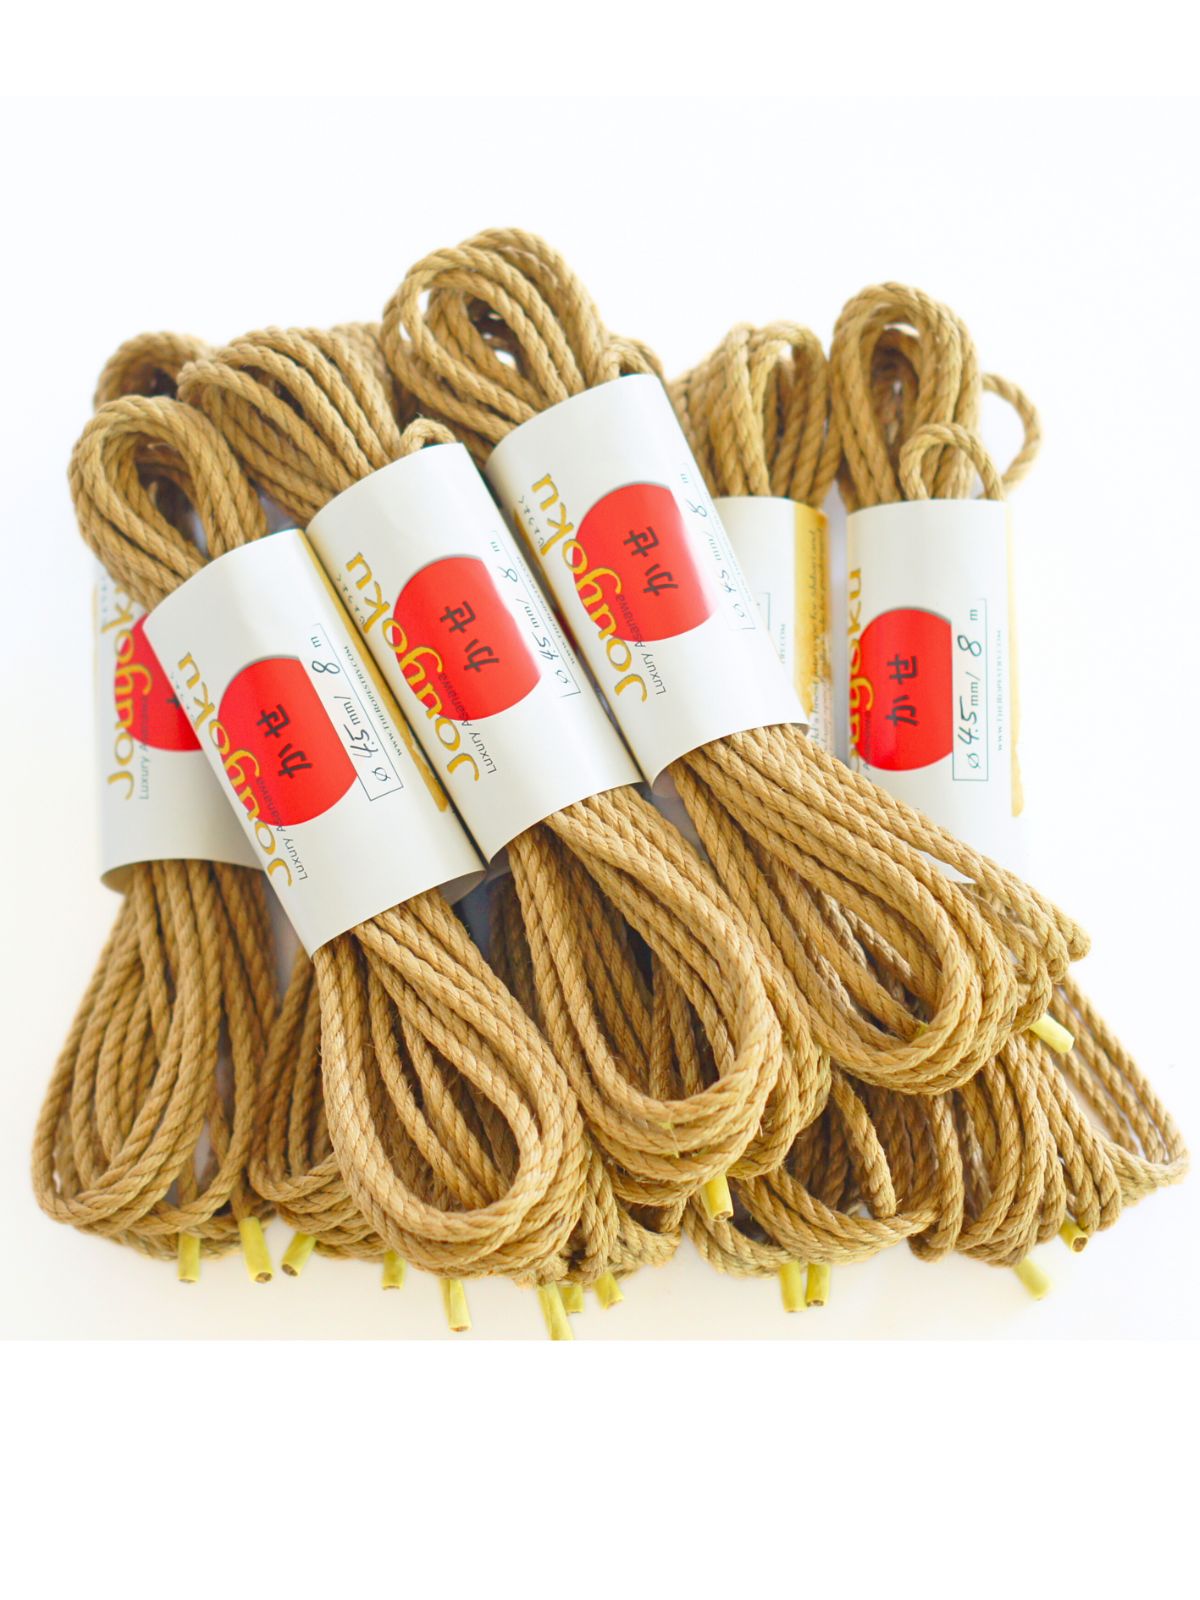 ø 4.5mm JOUYOKU ready-to-use jute rope for Shibari, Kinbaku bondage, various lengths and sets